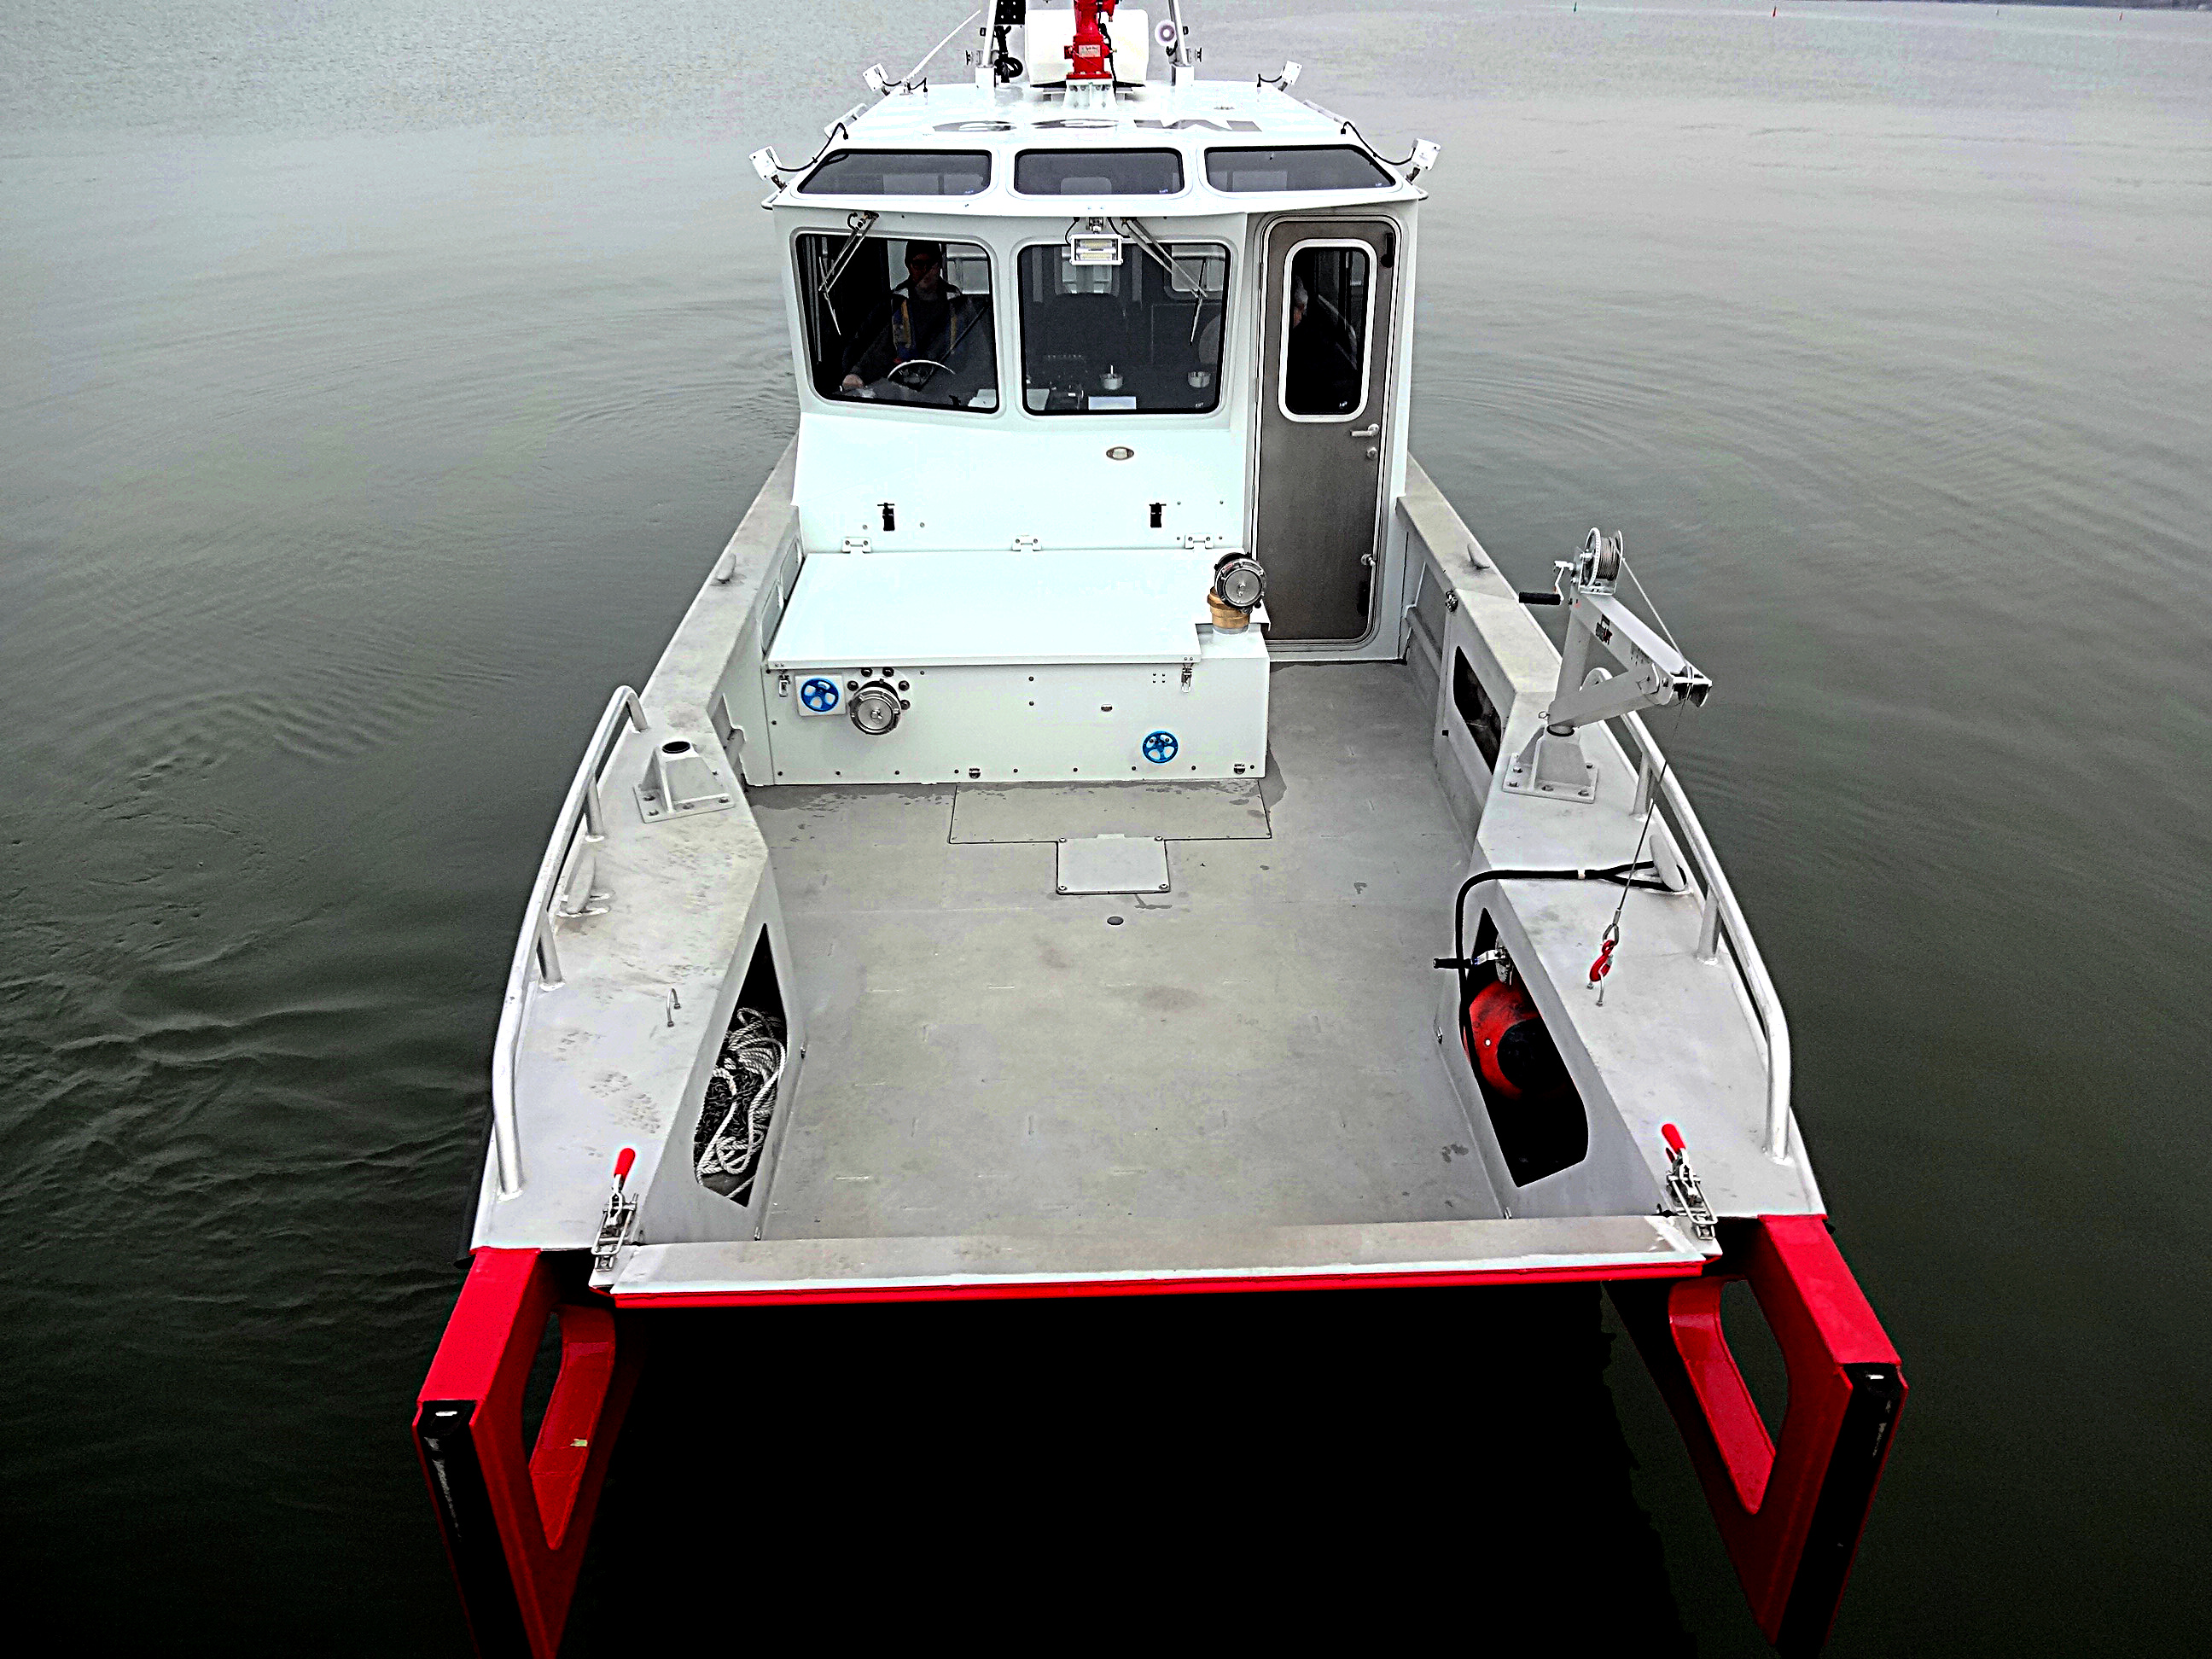 MetalcraftMarine-Jacksonville-Fire-Boat